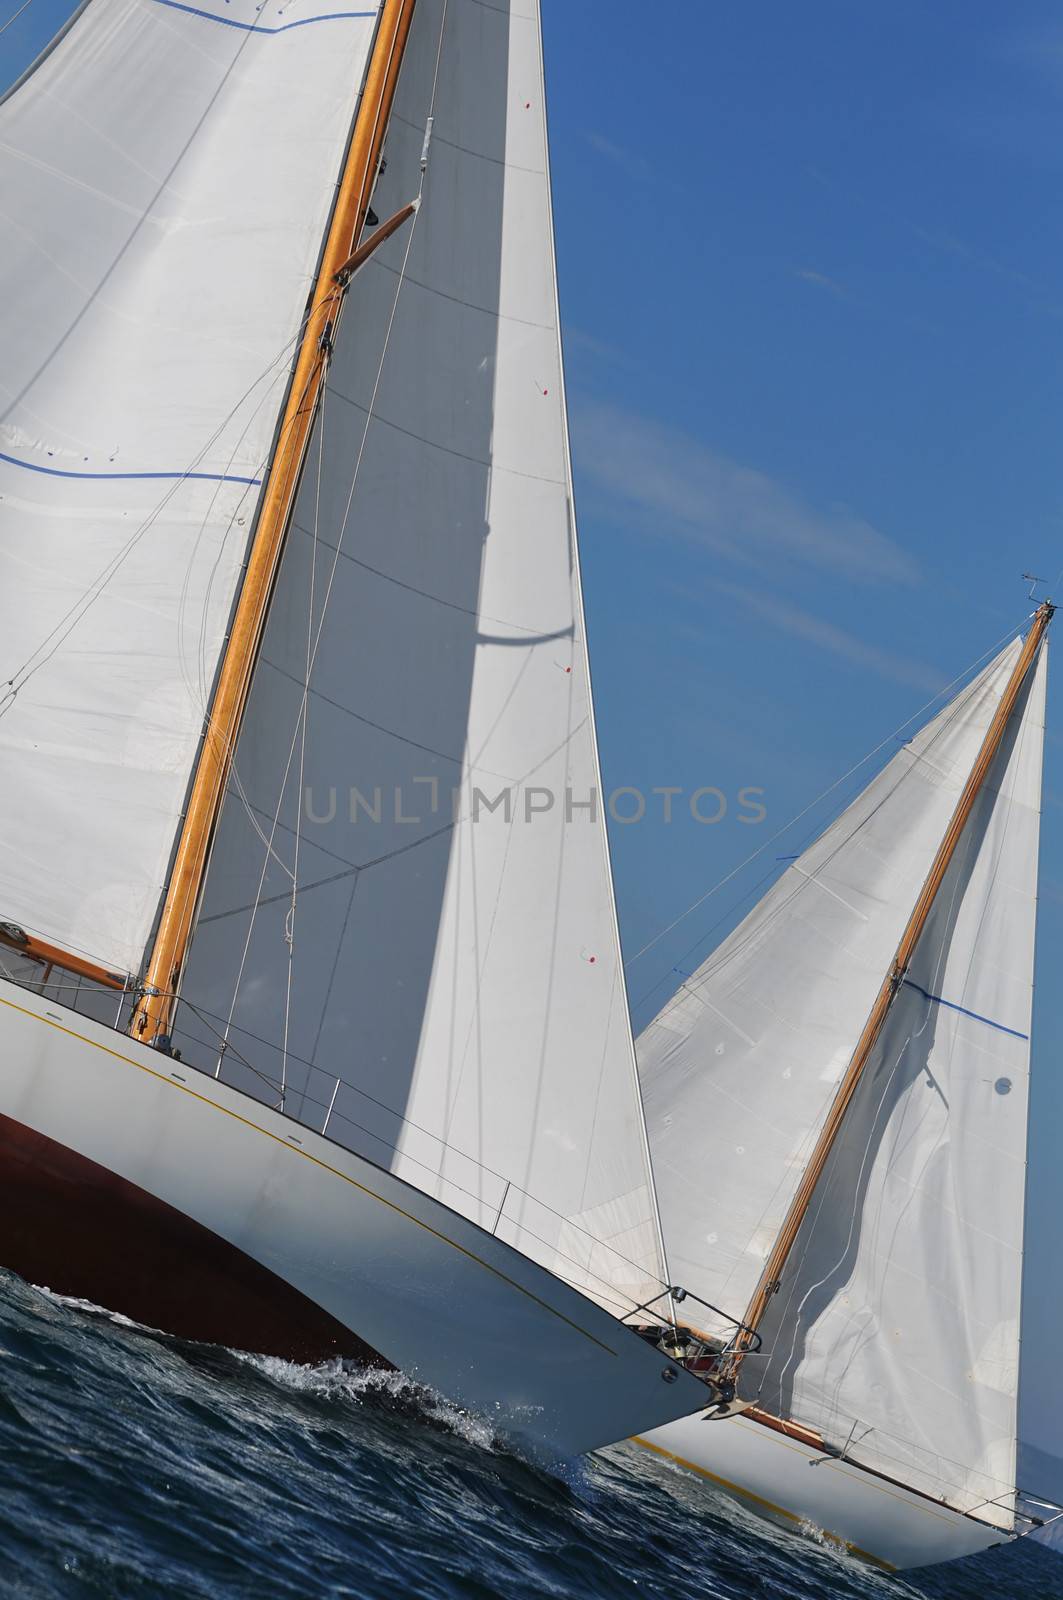 Saiiling race by lebanmax